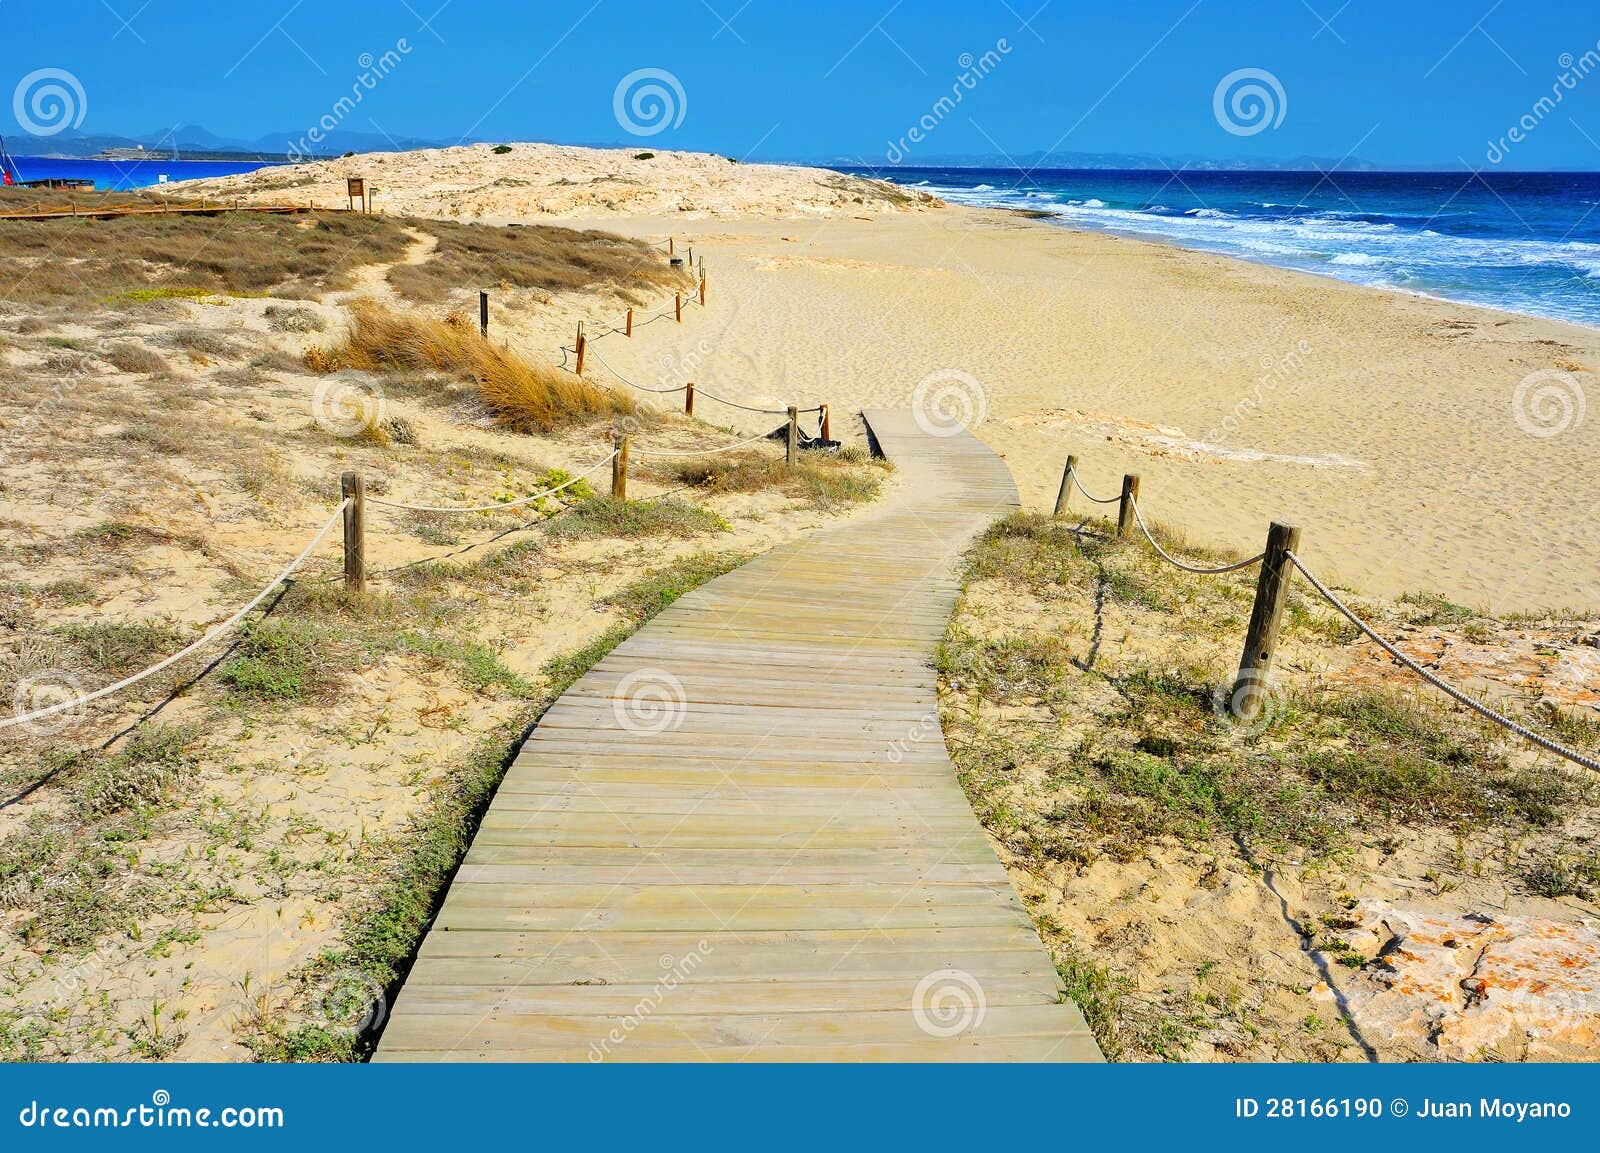 ses illetes beach in formentera, balearic islands